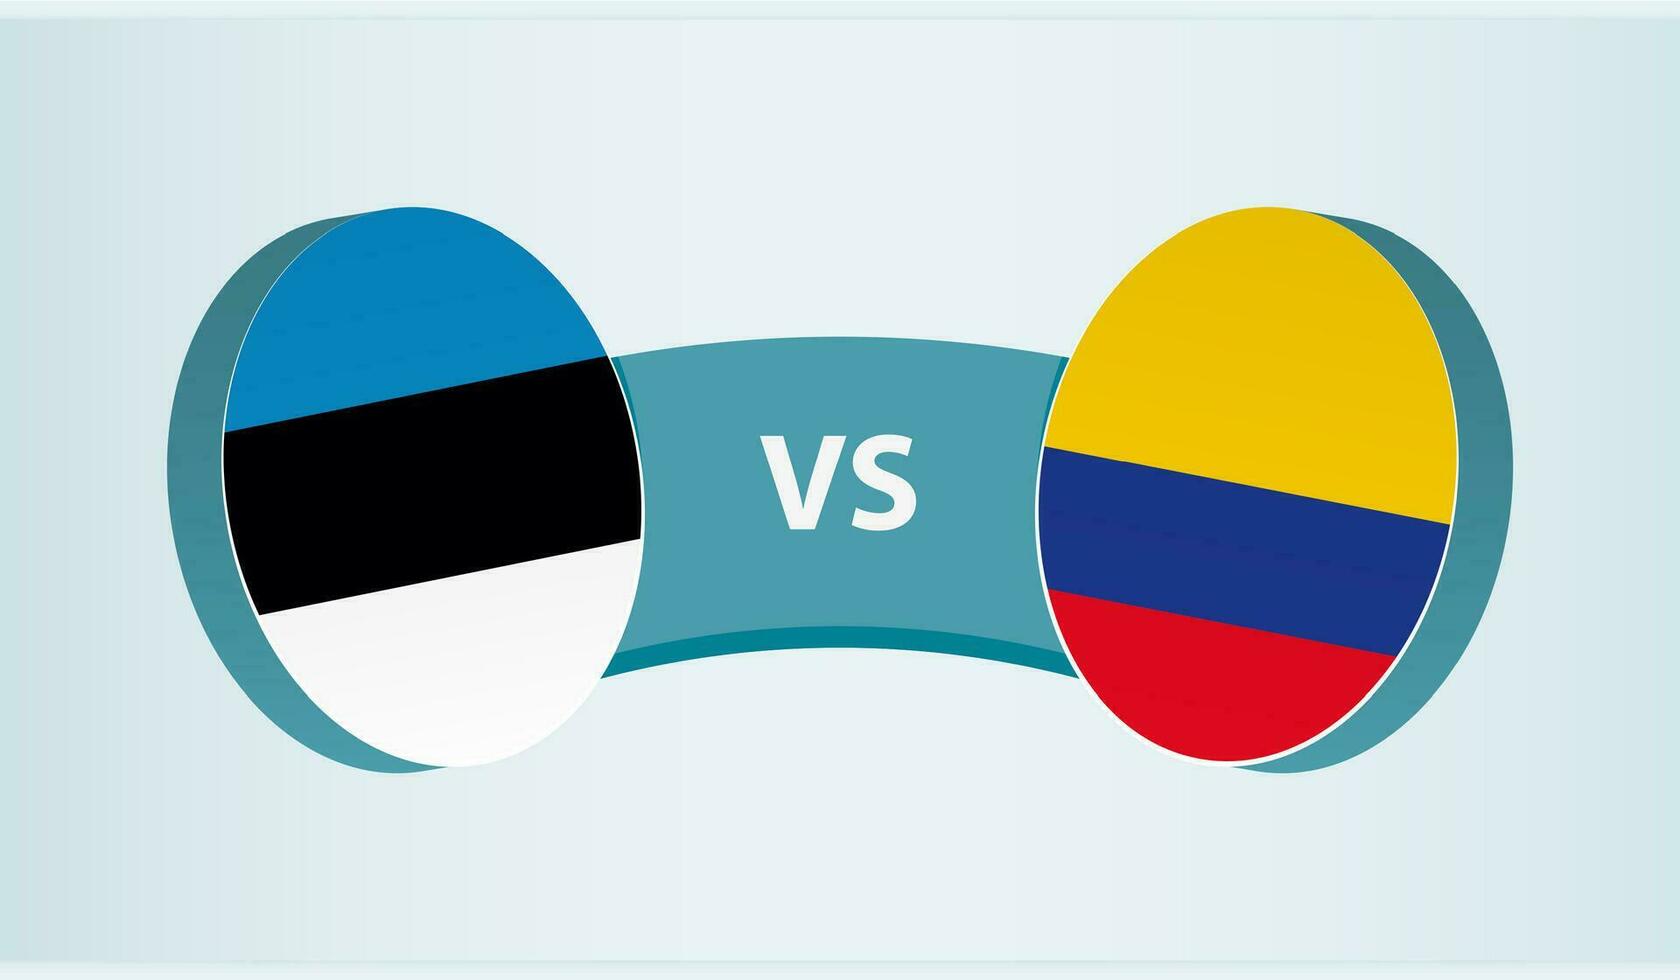 Estonia versus Colombia, team sports competition concept. vector